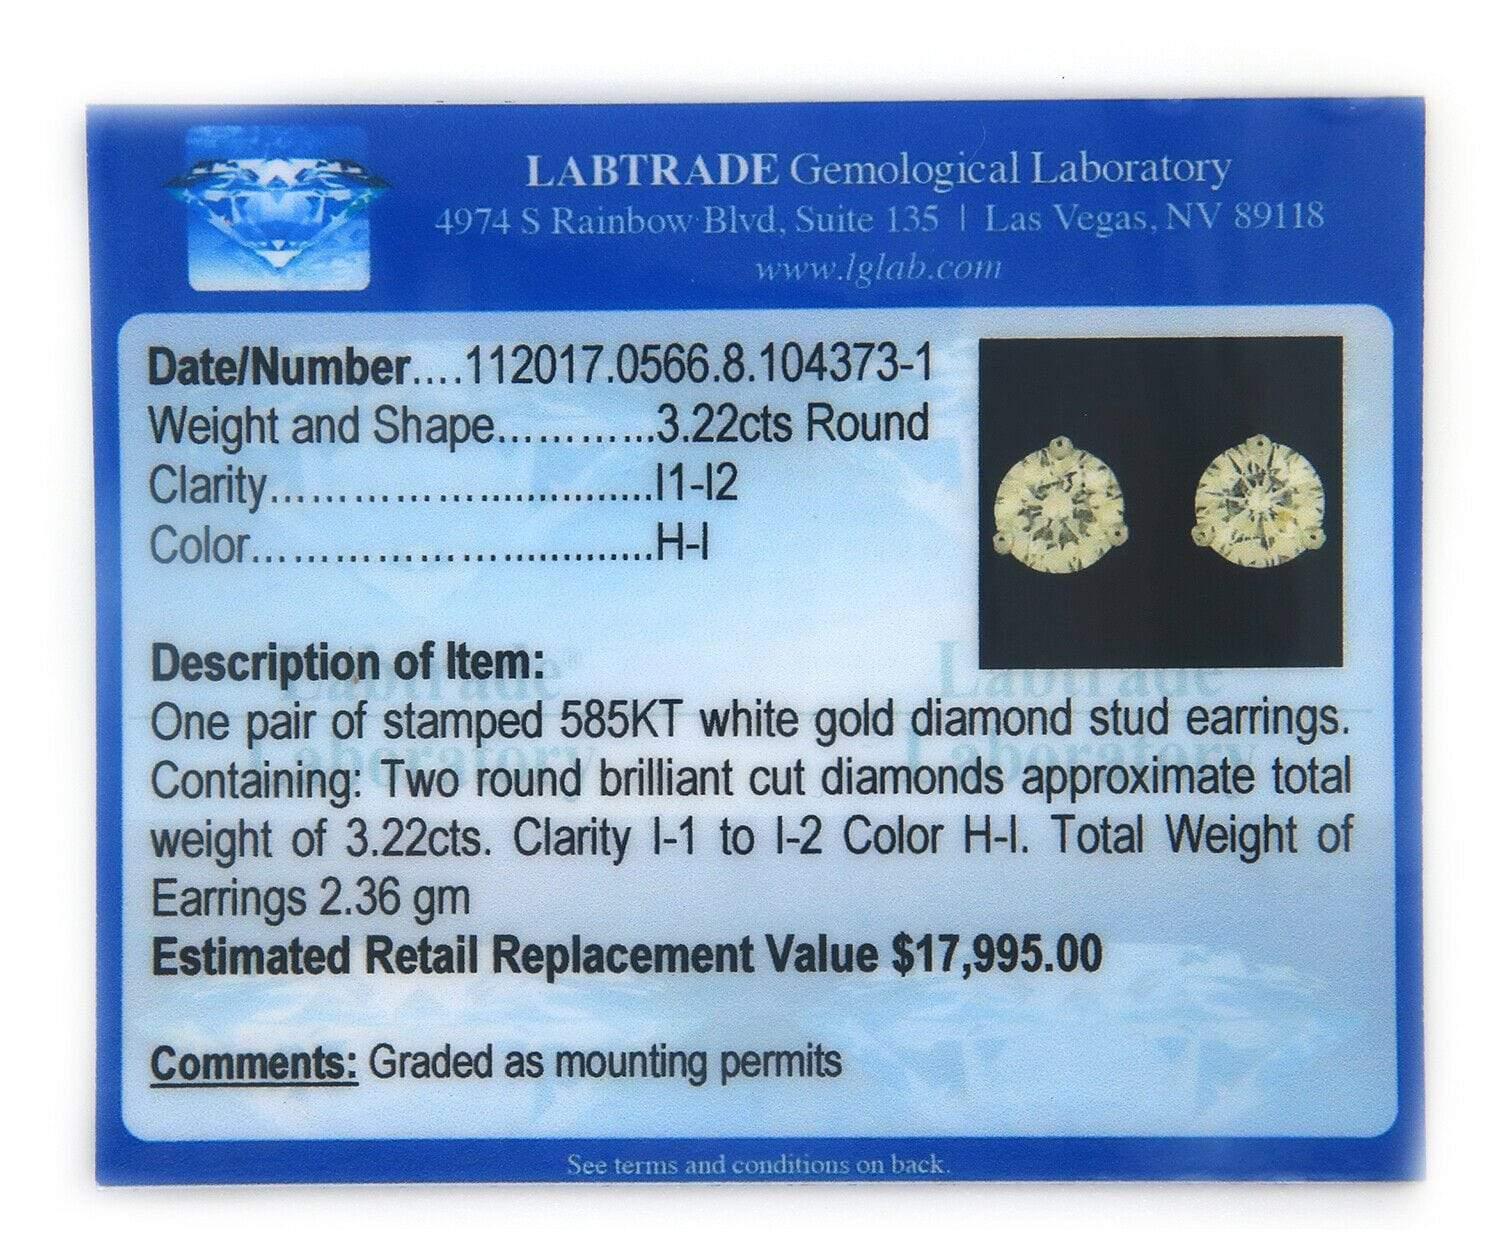 3.22ctw RBC Diamond Stud Earrings in 14K White Gold W/Cert

Round Brilliant Cut Diamond Studs
14K White Gold
Diamond Carat Weight (Approx.): 3.22ct
Diamond Clarity: I1-I2
Diamond Color: H-I
Stud Size: 6.5mm Height x 15mm Length
Stud Weight: 1.6